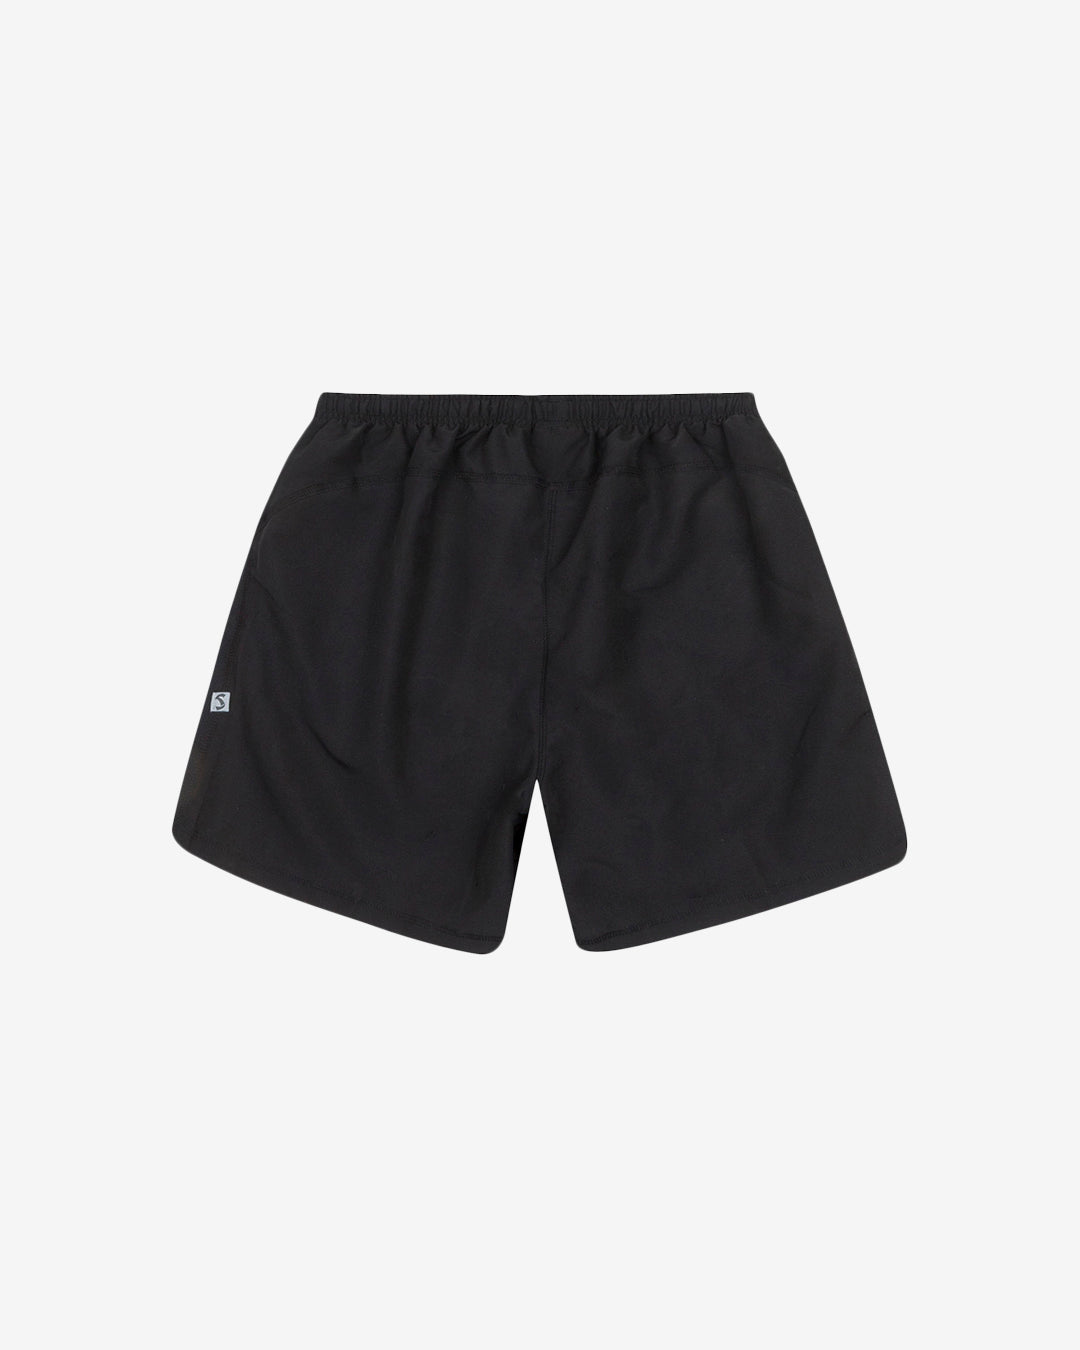 Hc: 9606 - Clipper Shorts - Black